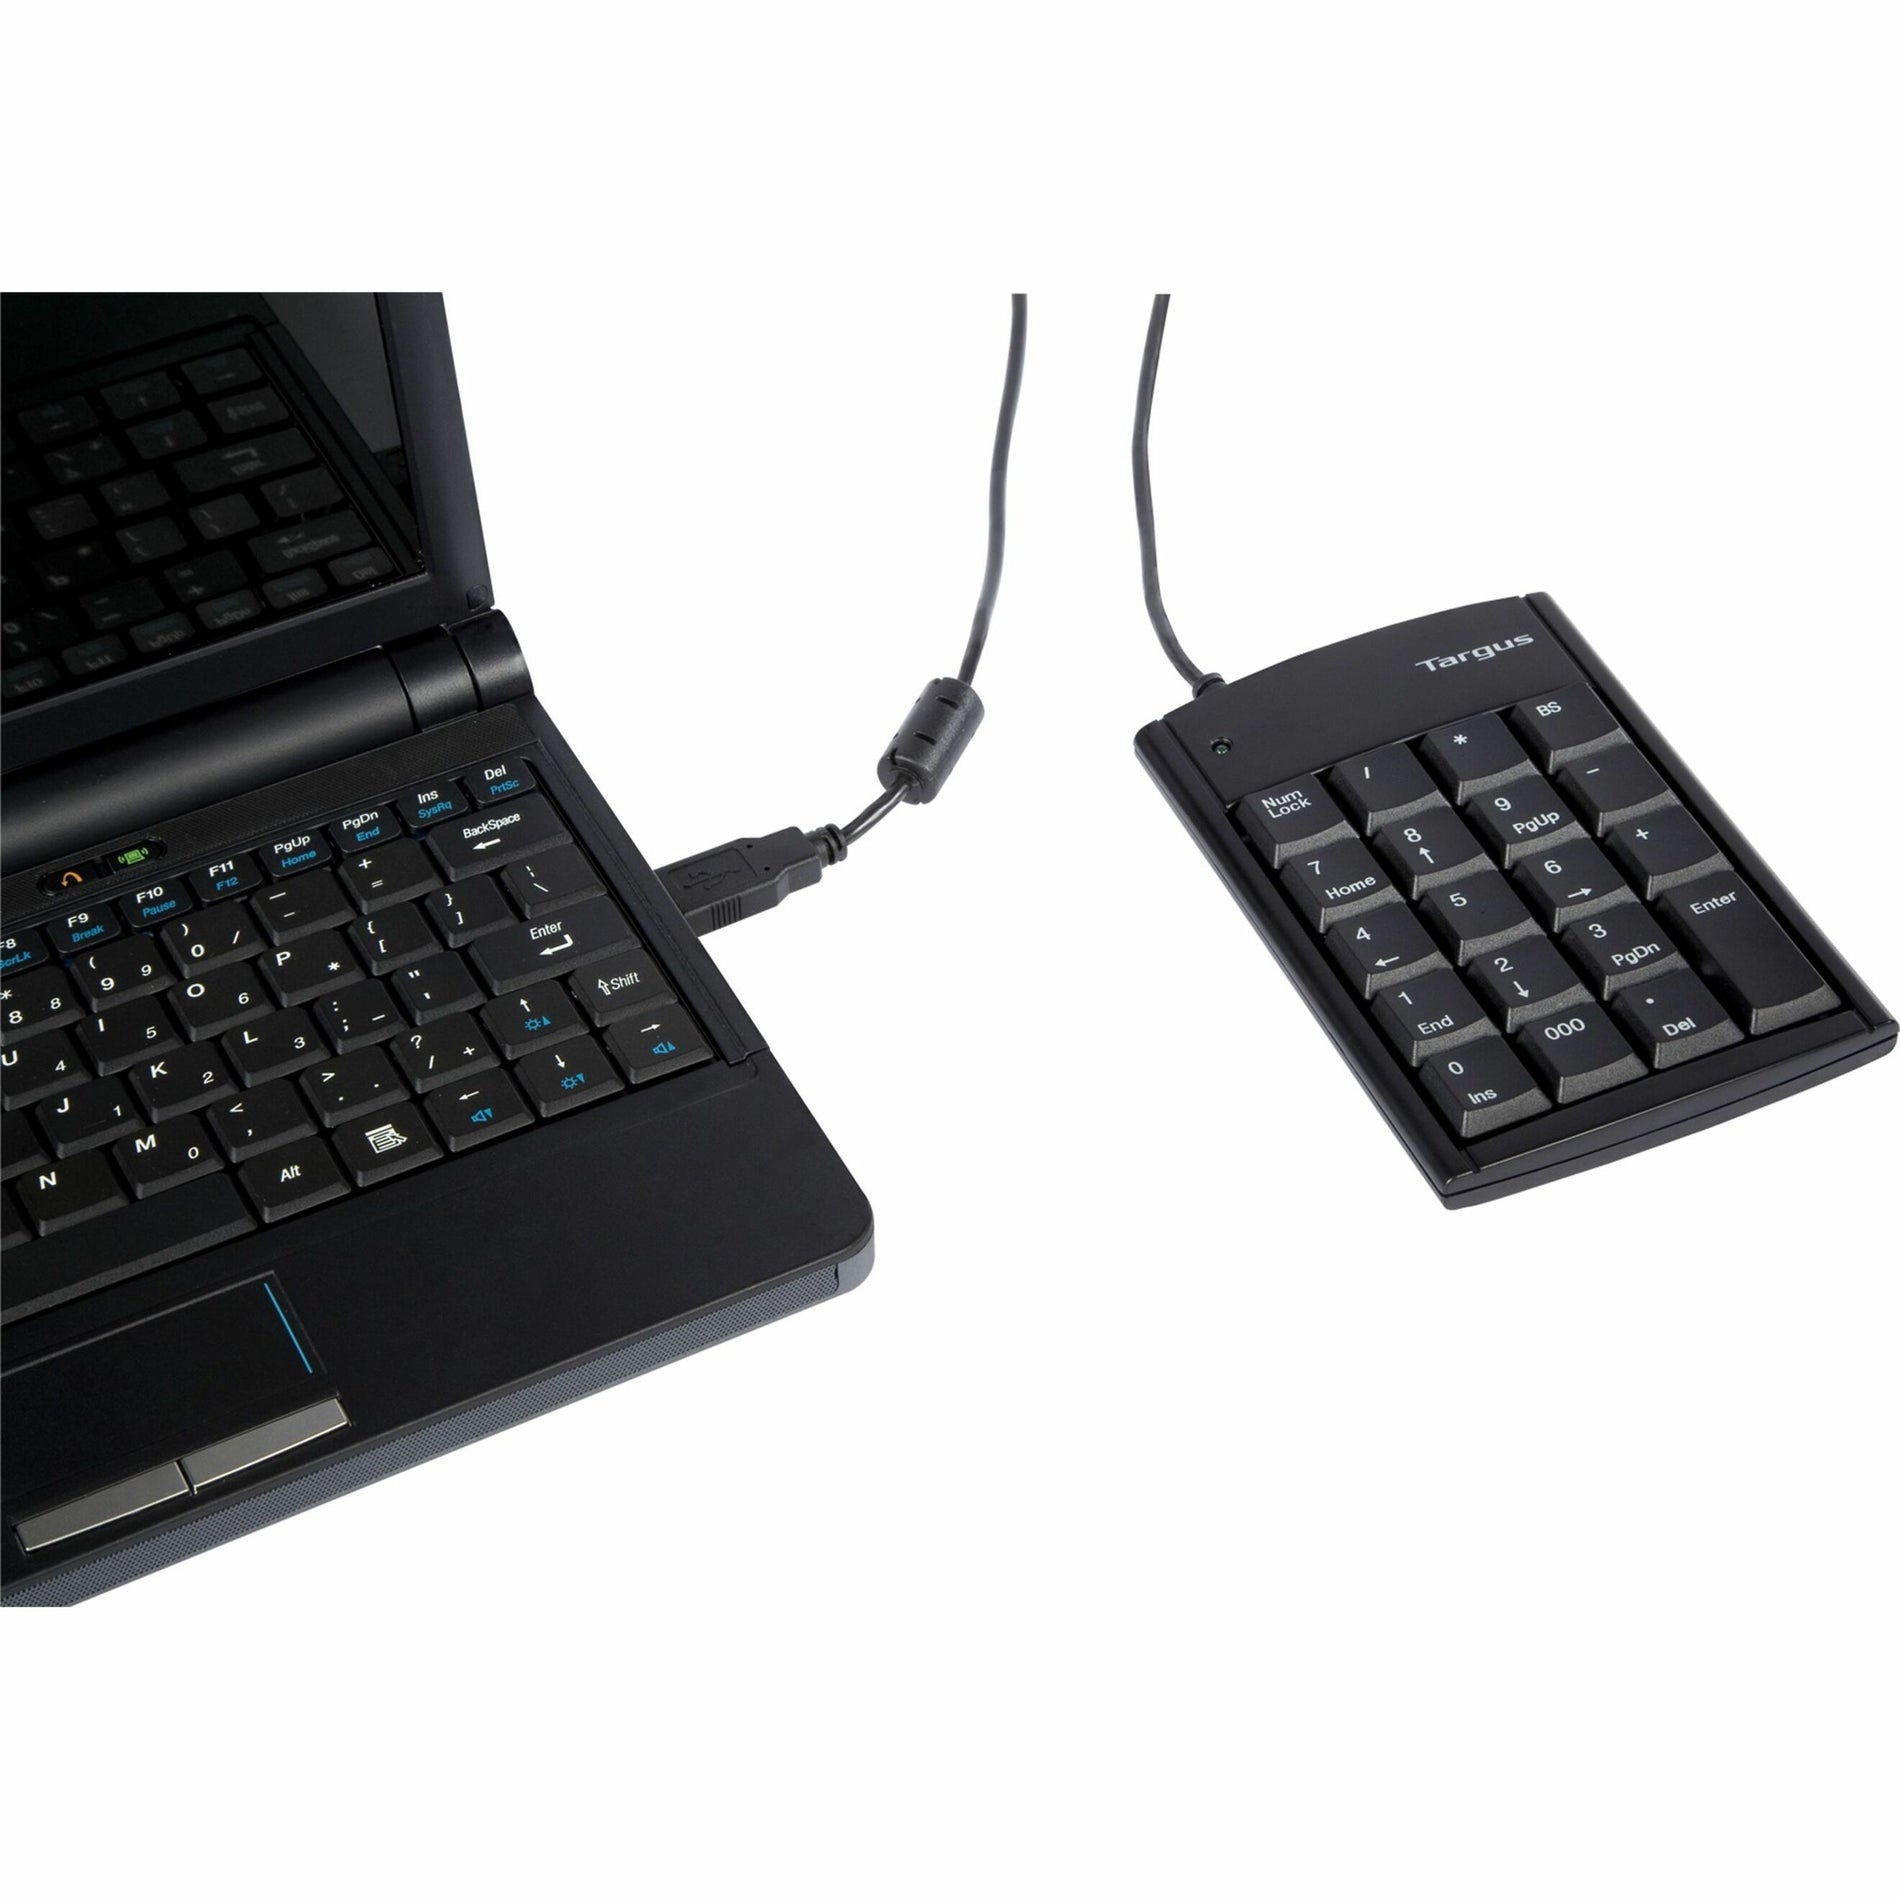 Targus PAUK10U Ultra Mini USB Keypad - USB - 19 Keys - Black, Convenient Data Input for Spreadsheet and Financial Applications